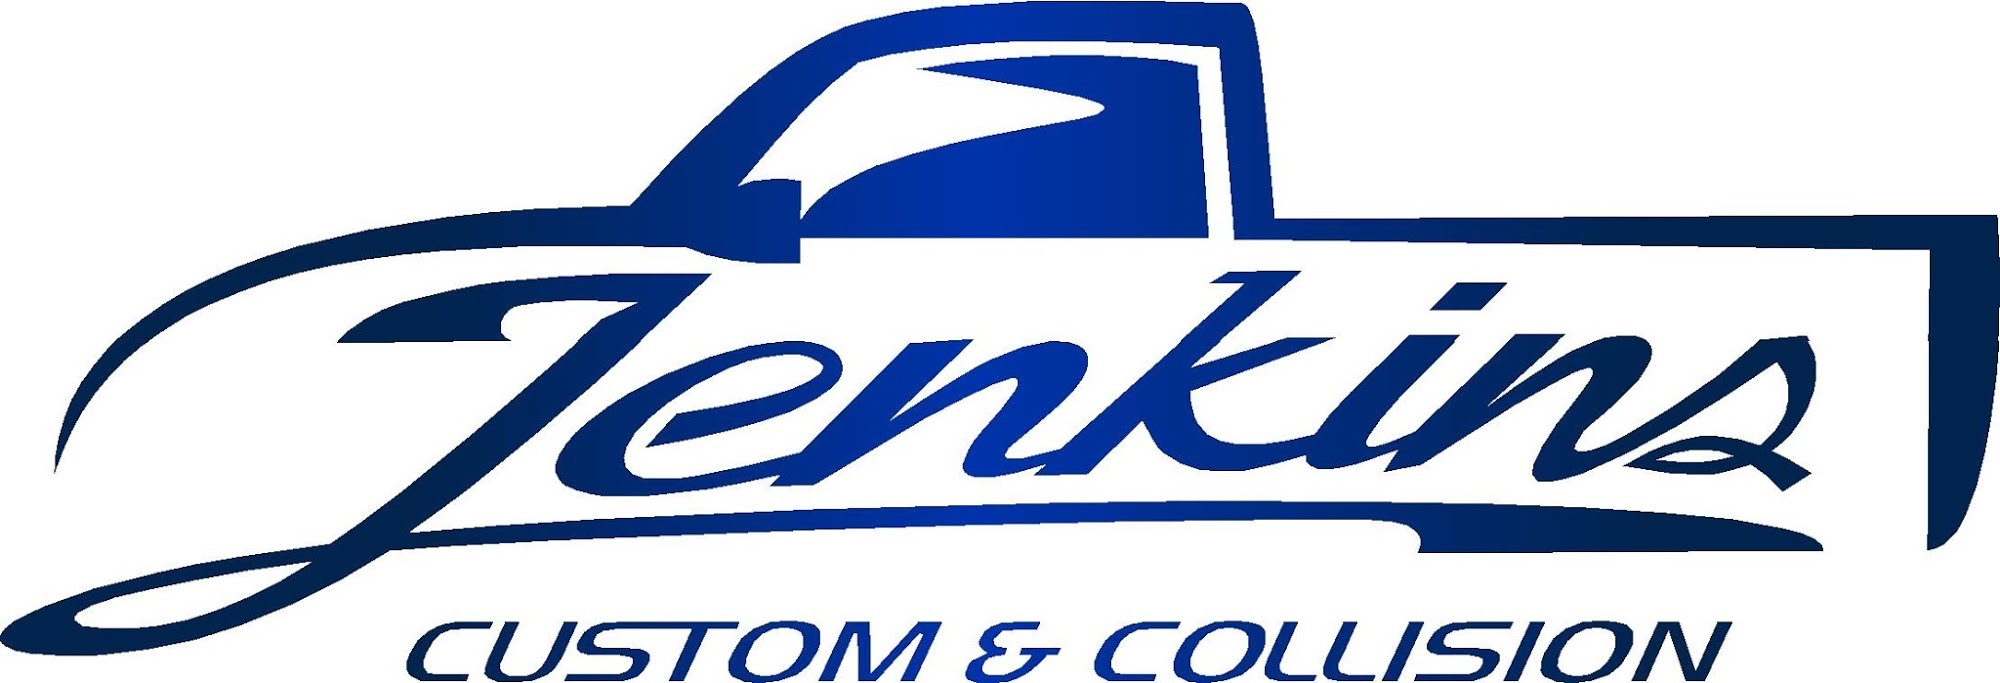 Jenkins Custom and Collision